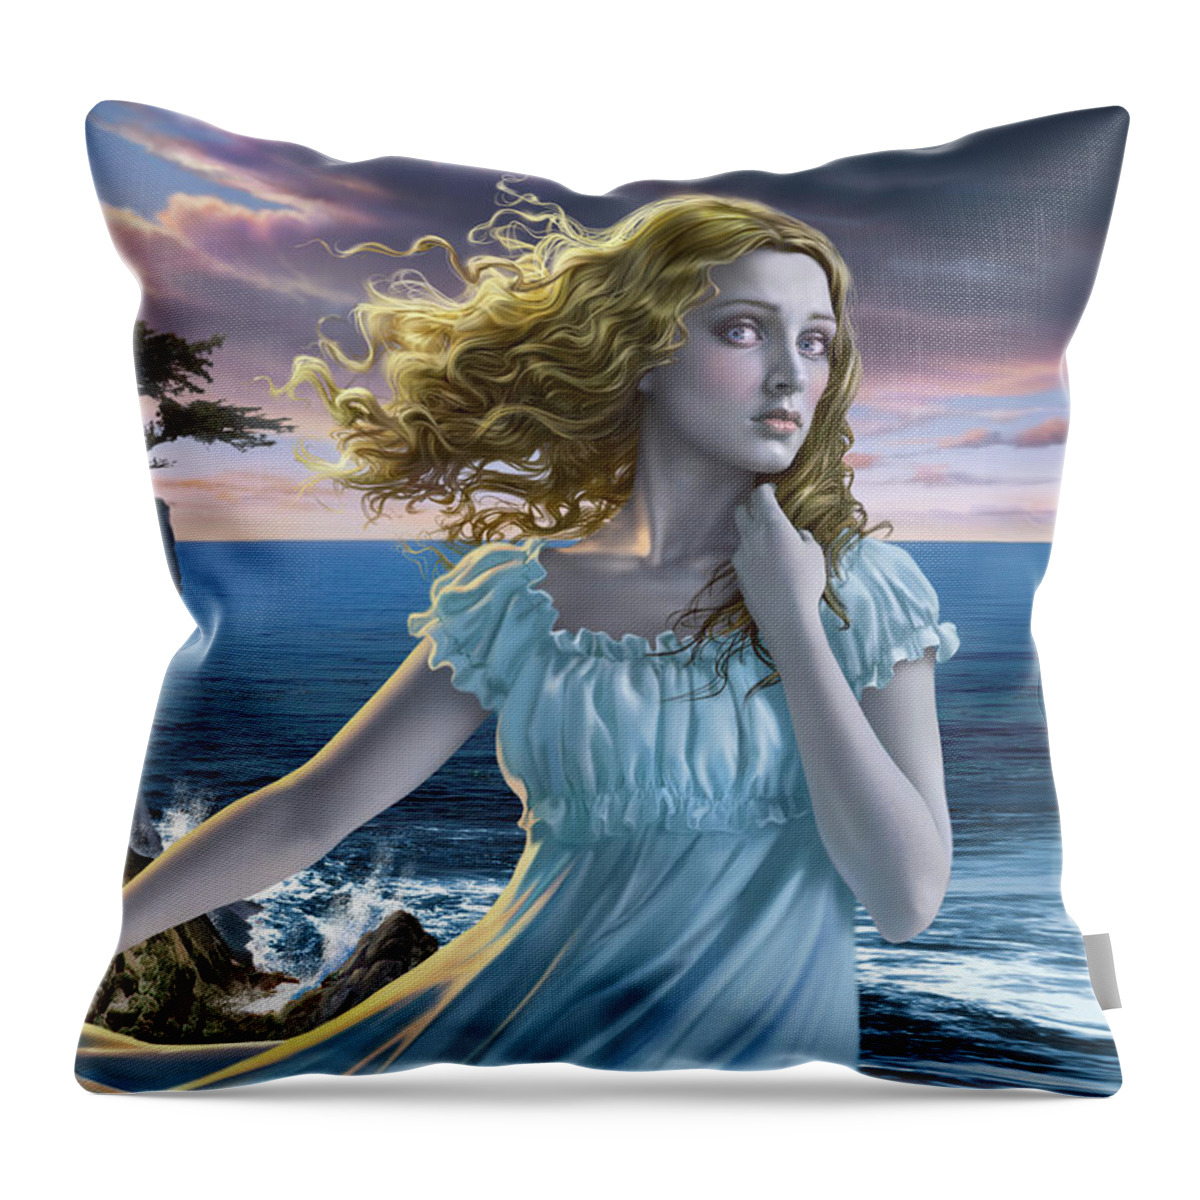 Edgar Allen Poe Throw Pillow featuring the digital art Poe's Lenore by Mark Fredrickson